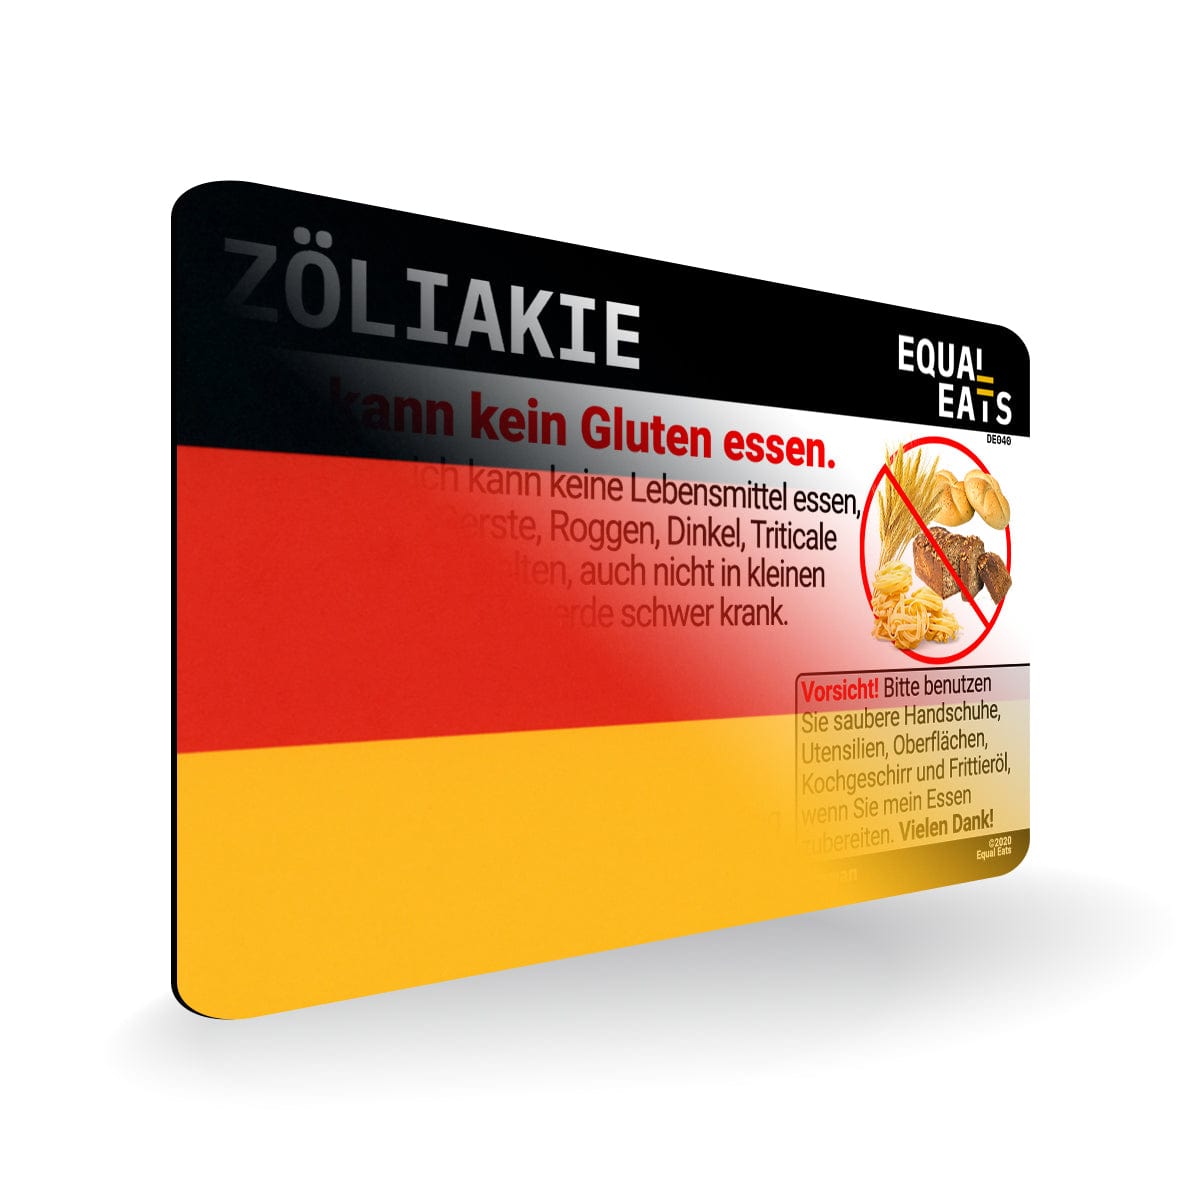 German Celiac Disease Card - Gluten Free Travel in Germany